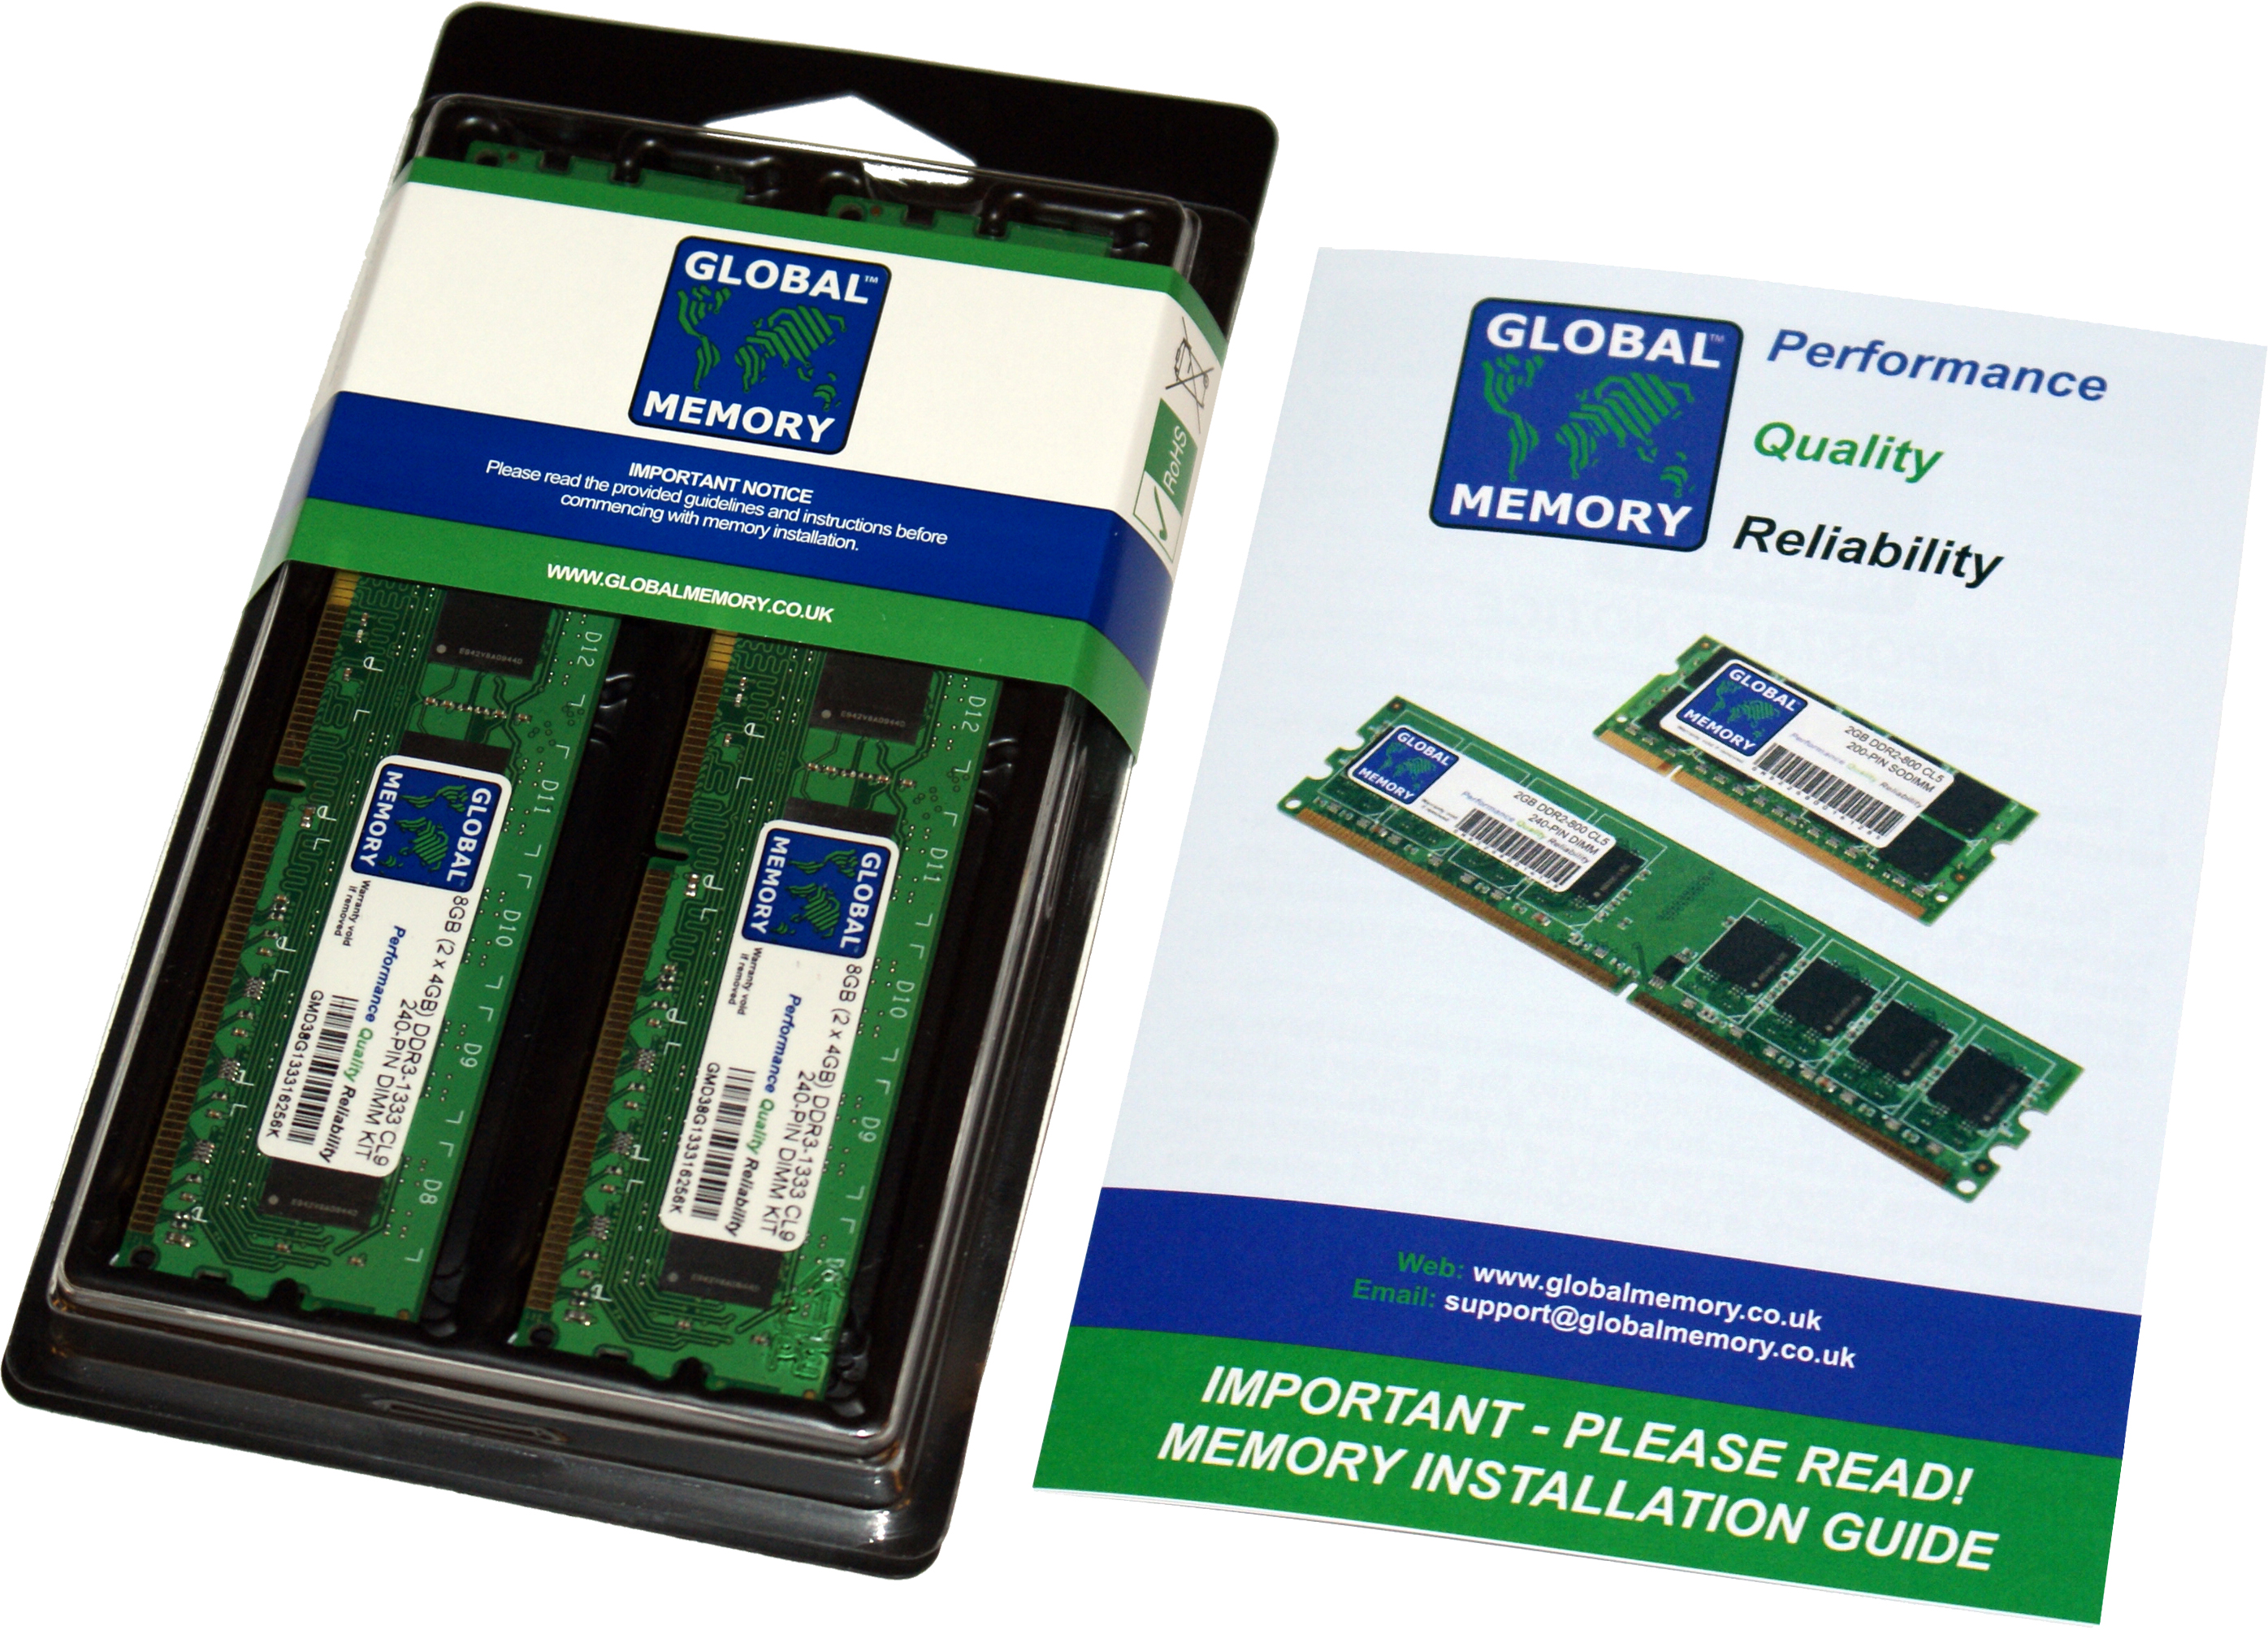 8GB (2 x 4GB) DDR4 2400MHz PC4-19200 288-PIN DIMM MEMORY RAM KIT FOR LENOVO PC DESKTOPS